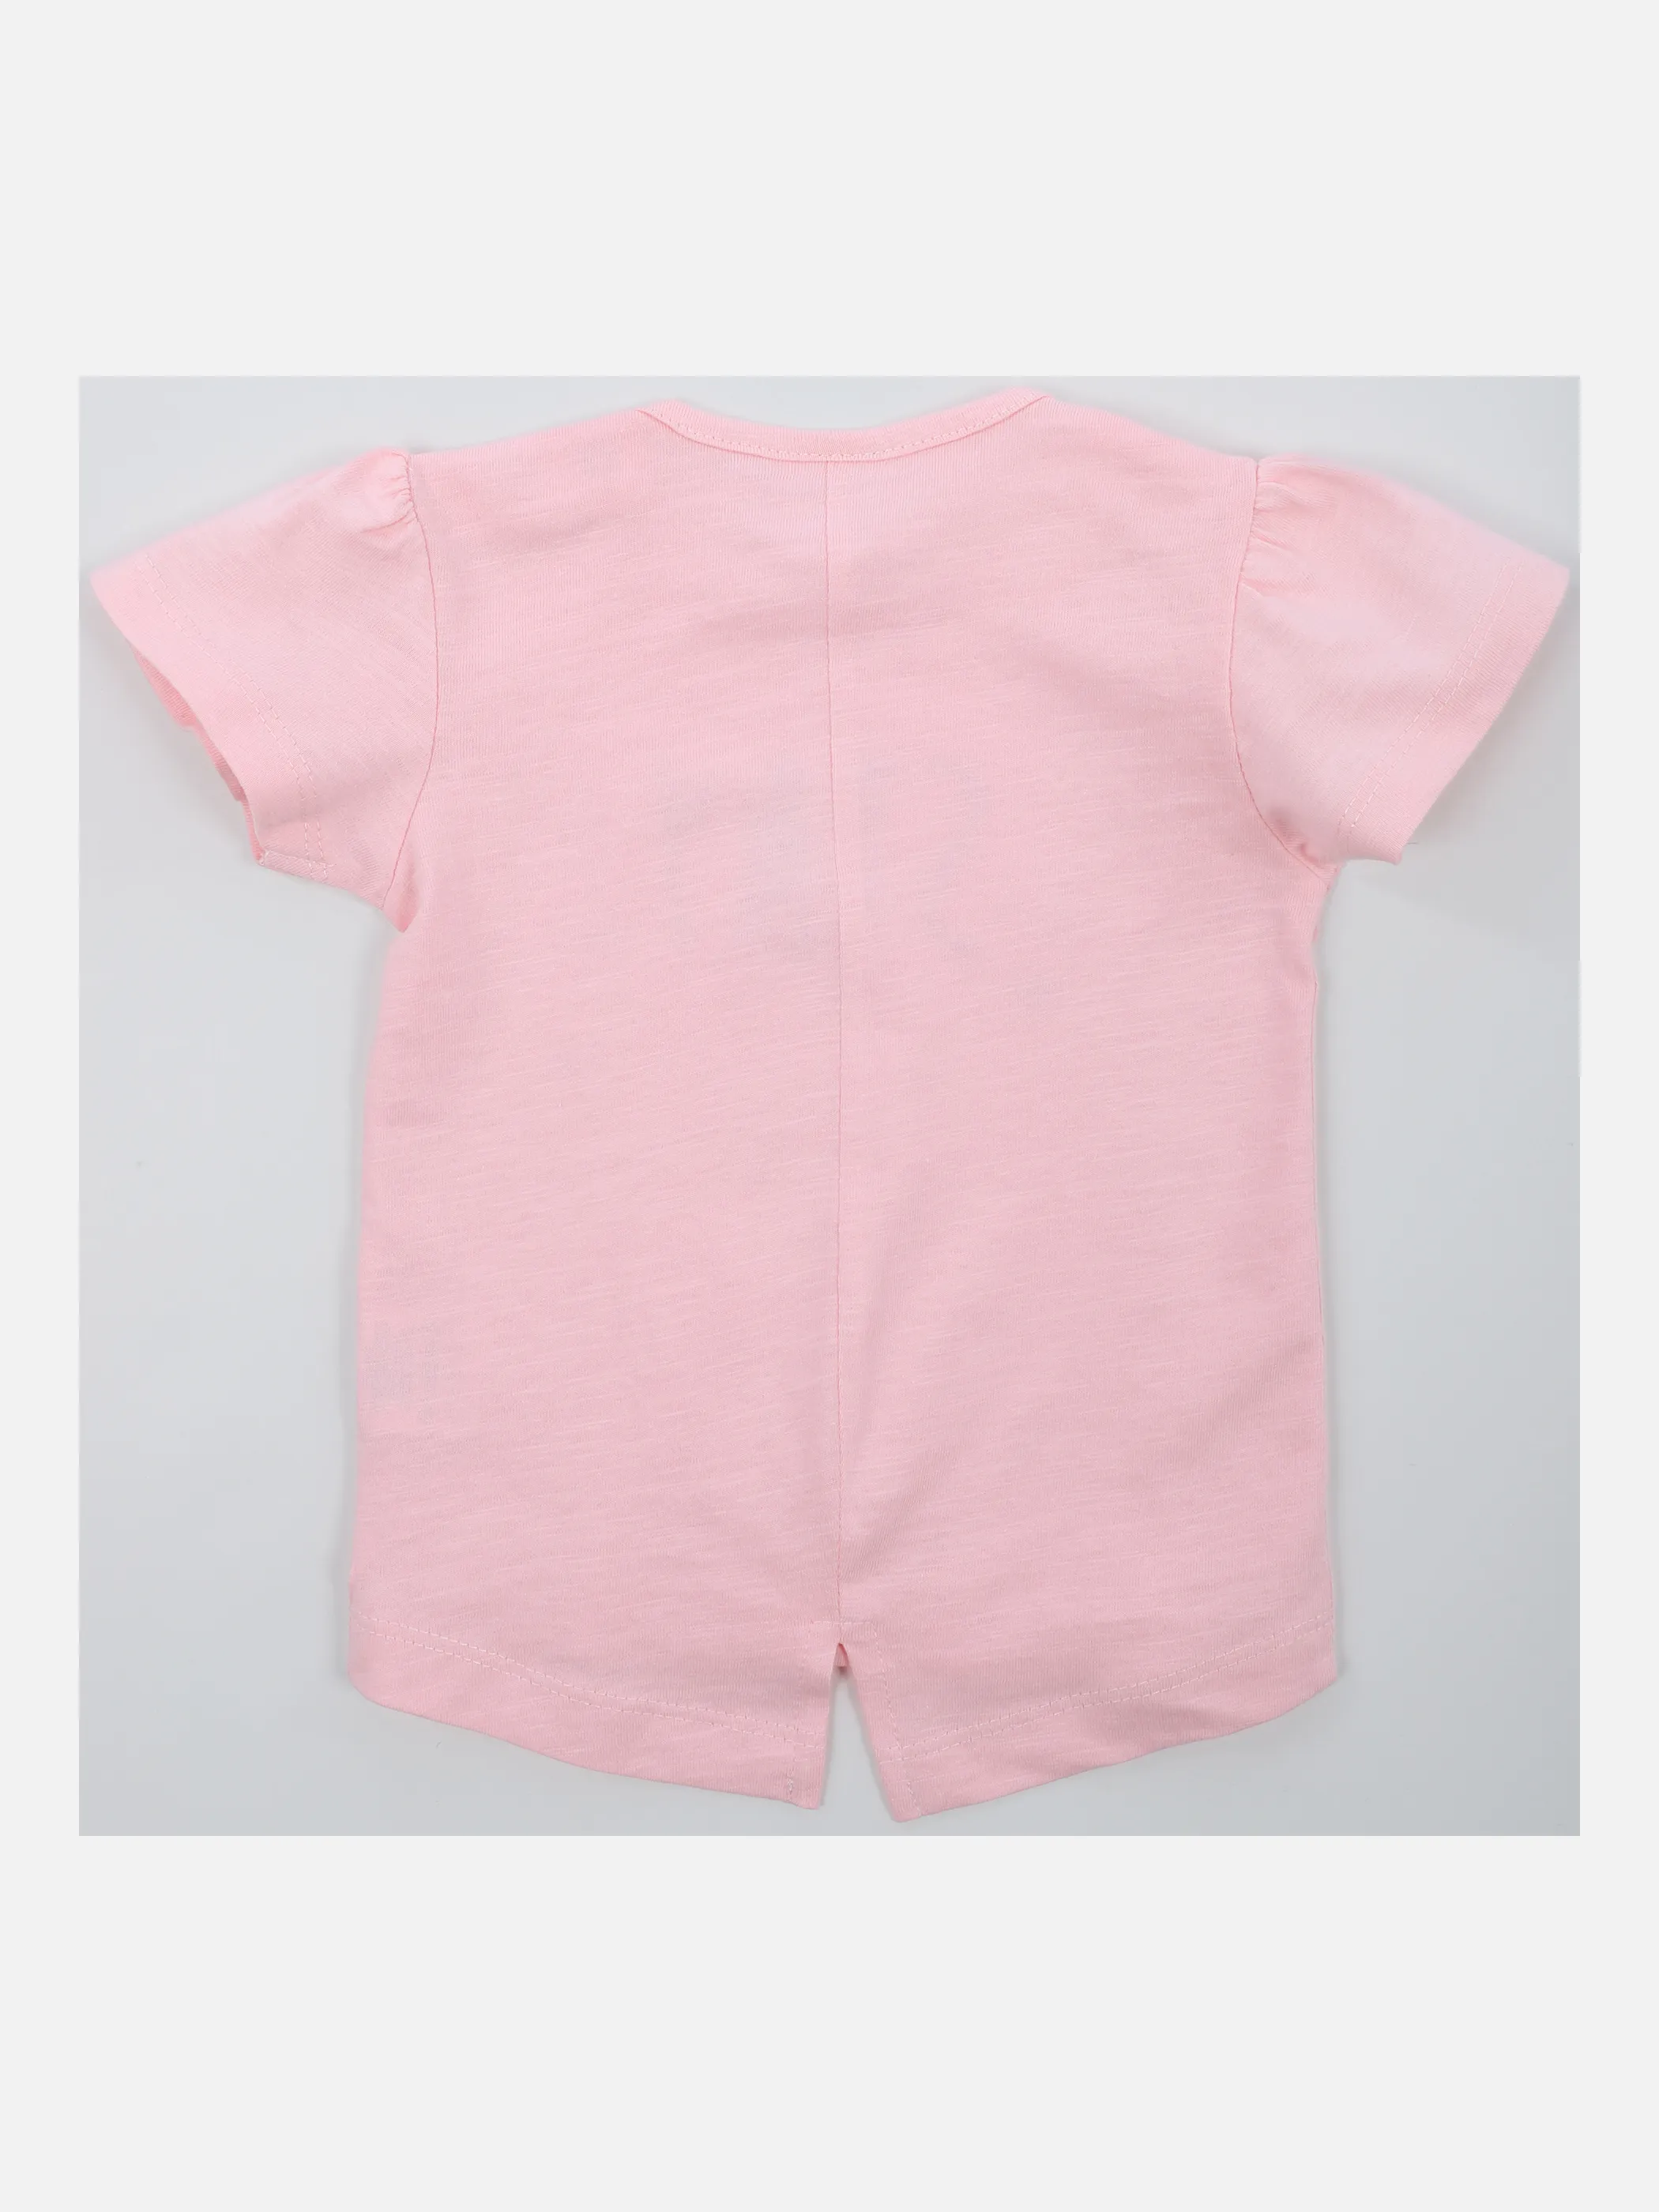 Bubble Gum BG TShirt in rosa mit Wording Rosa 860621 ROSA 2